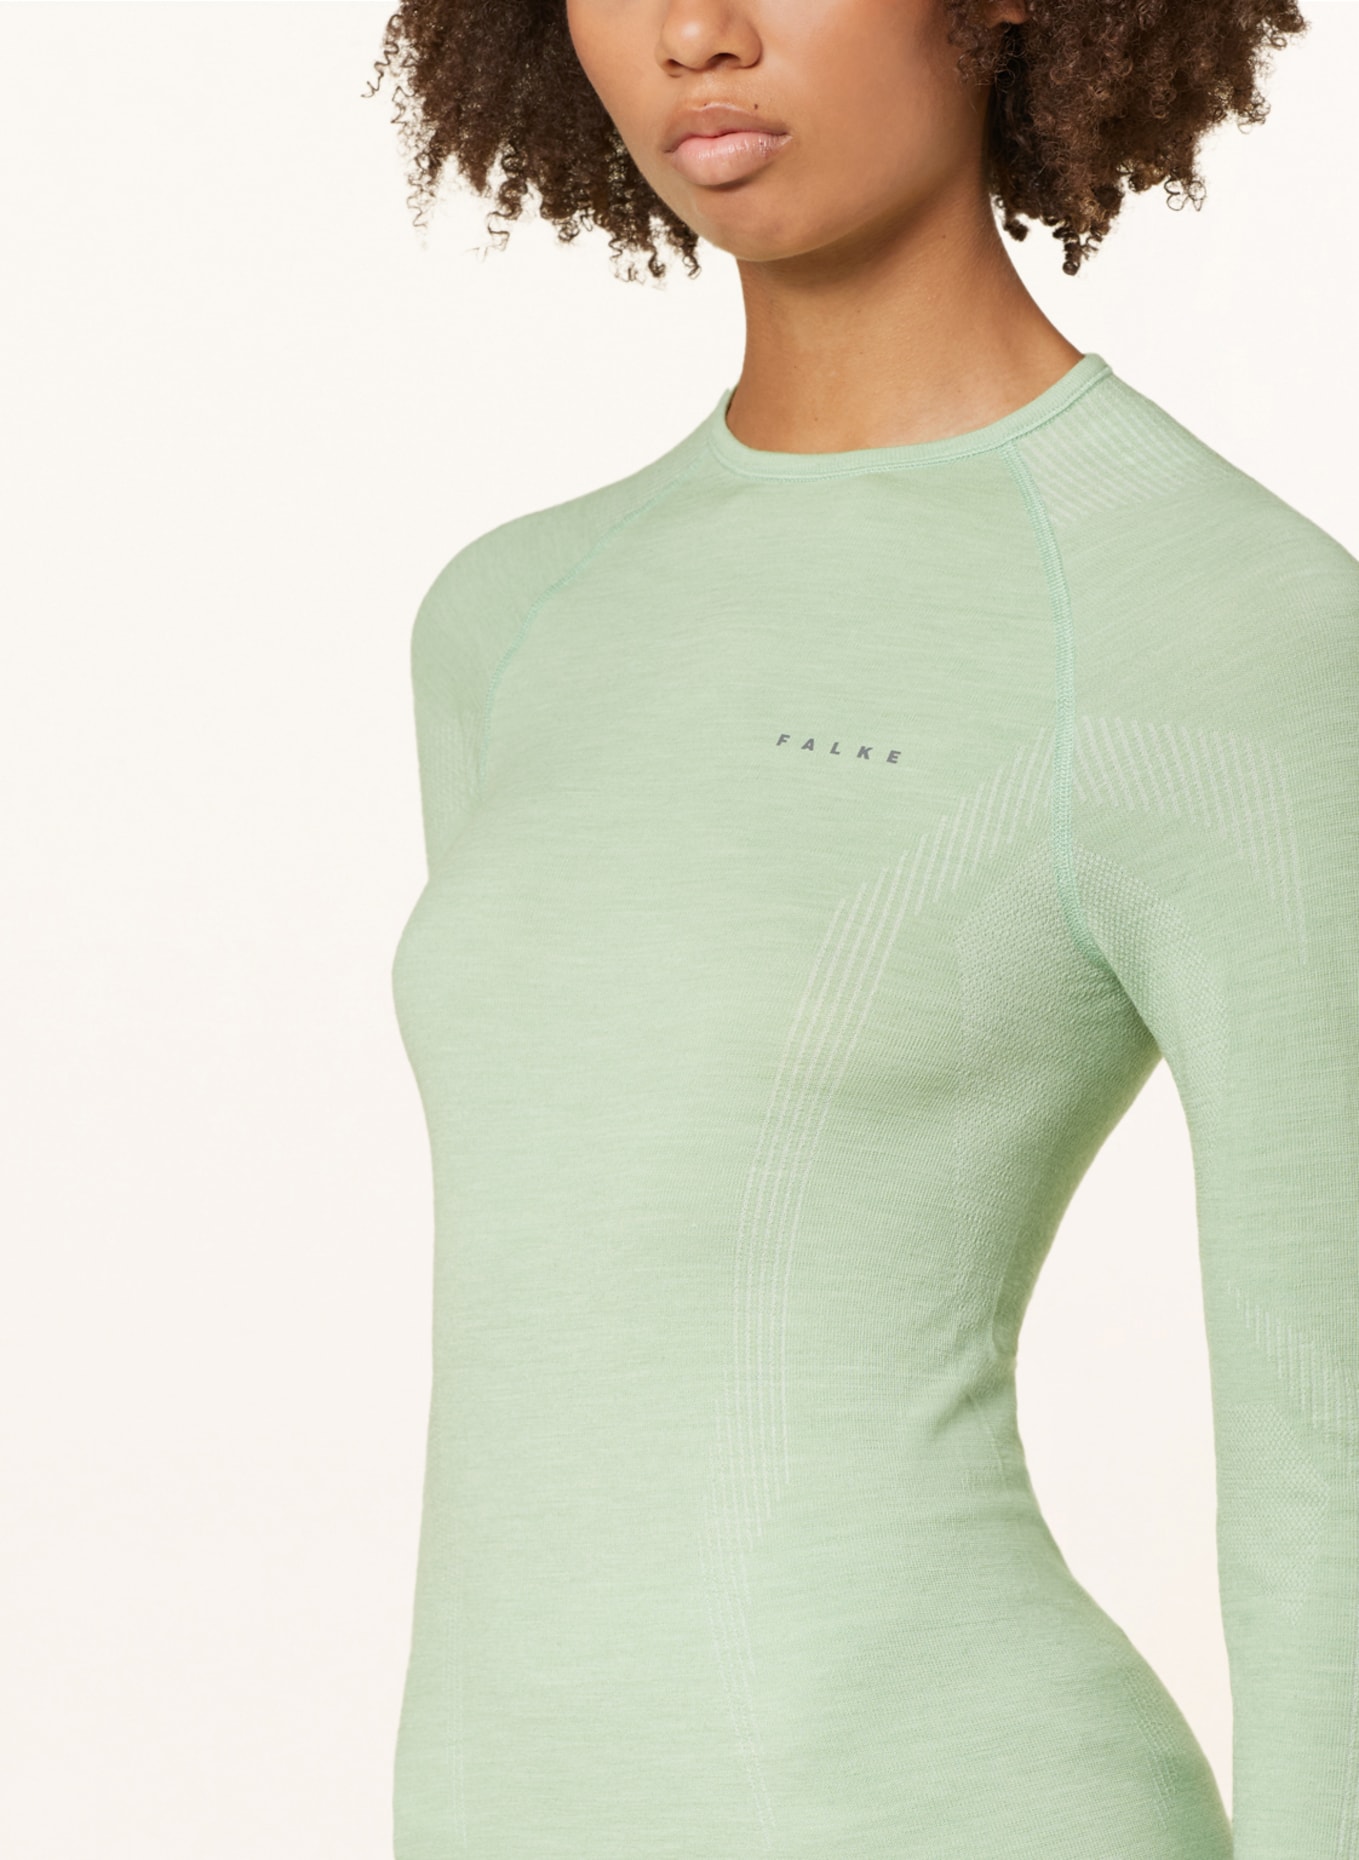 FALKE Functional underwear shirt WOOL-TECH with merino wool, Color: LIGHT GREEN (Image 4)